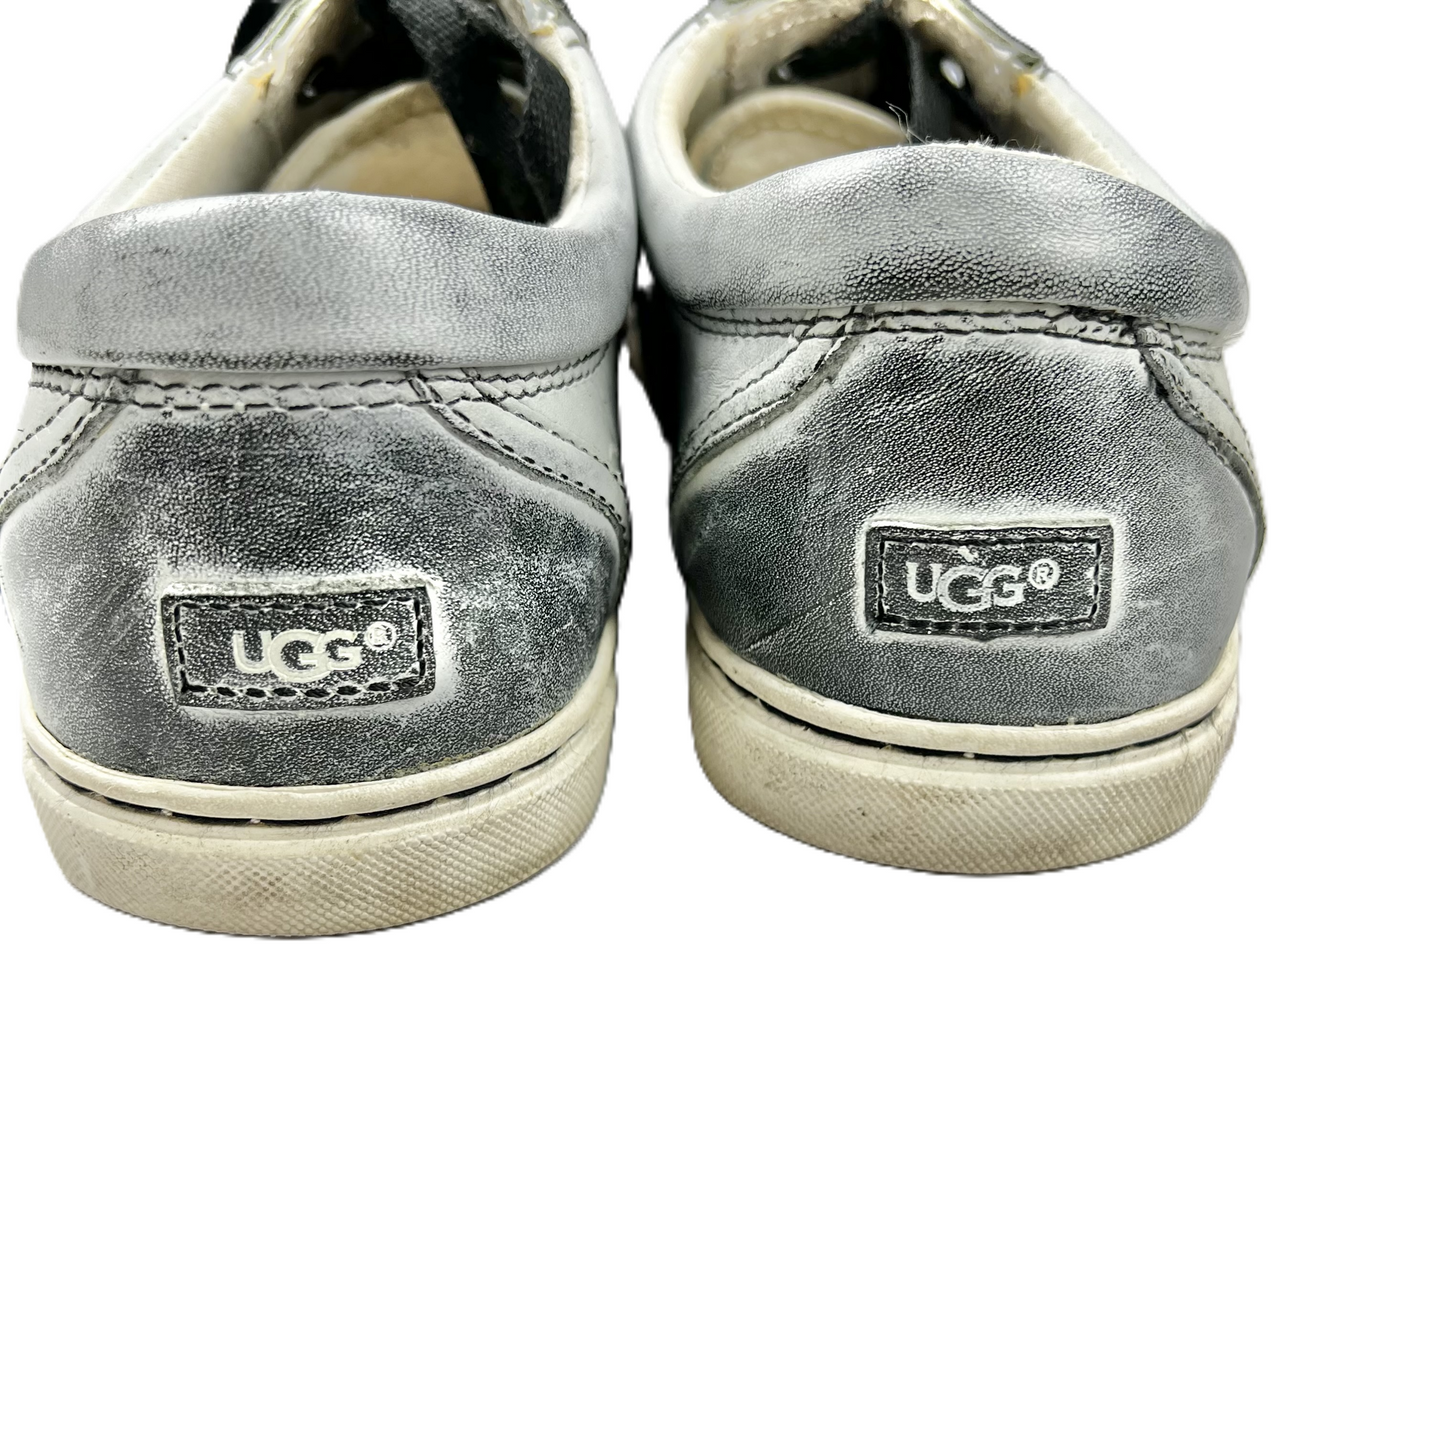 Grey Shoes Designer By Ugg, Size: 8